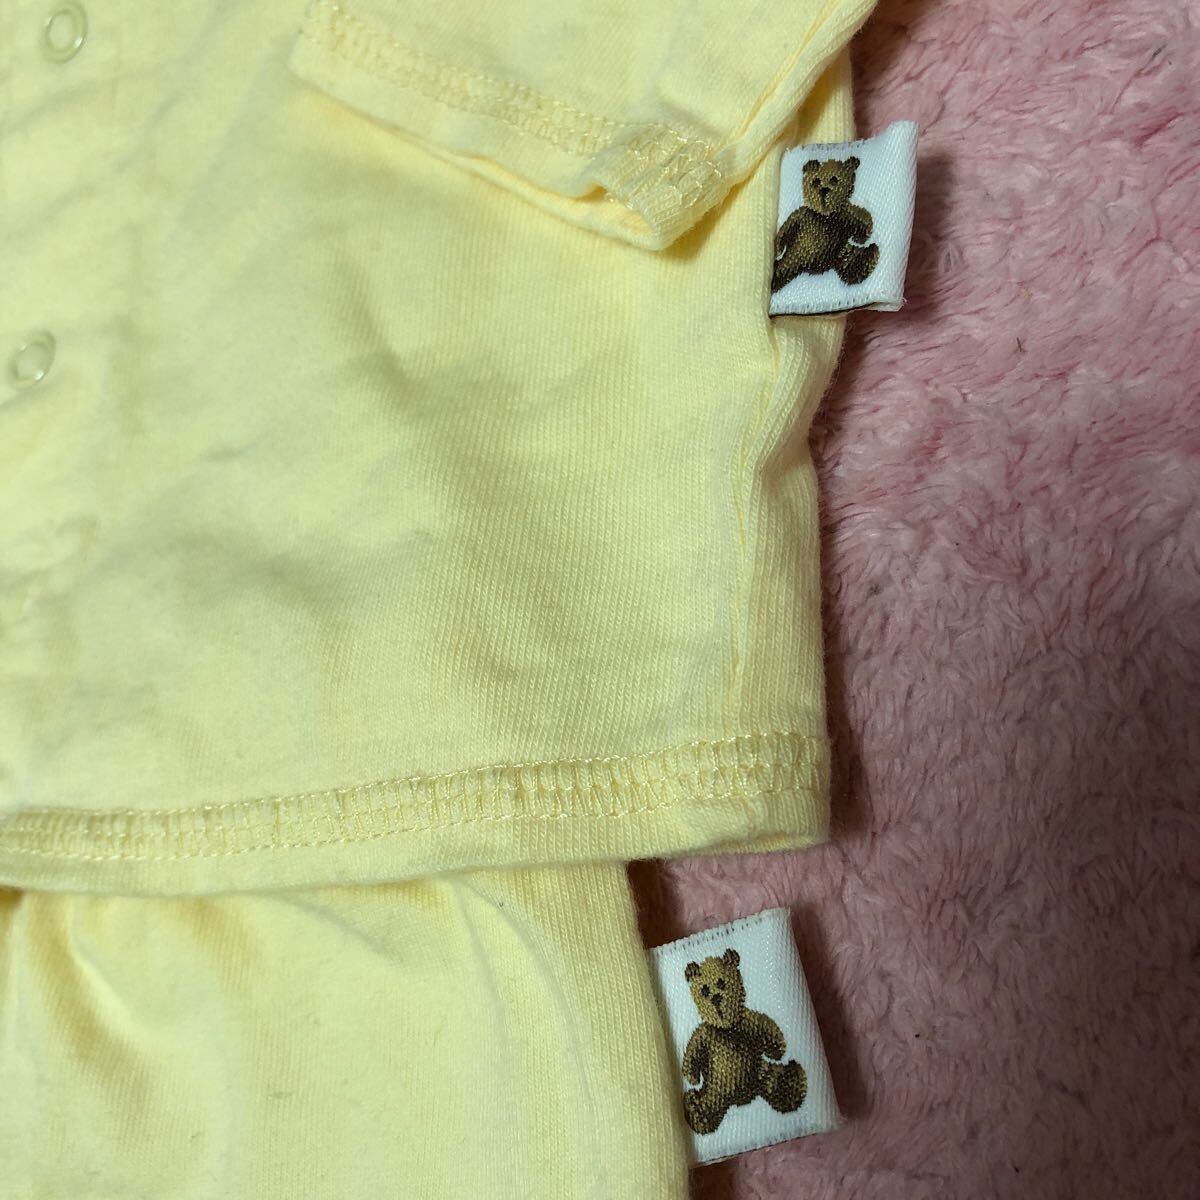 baby GAP top and bottom set pastel yellow 